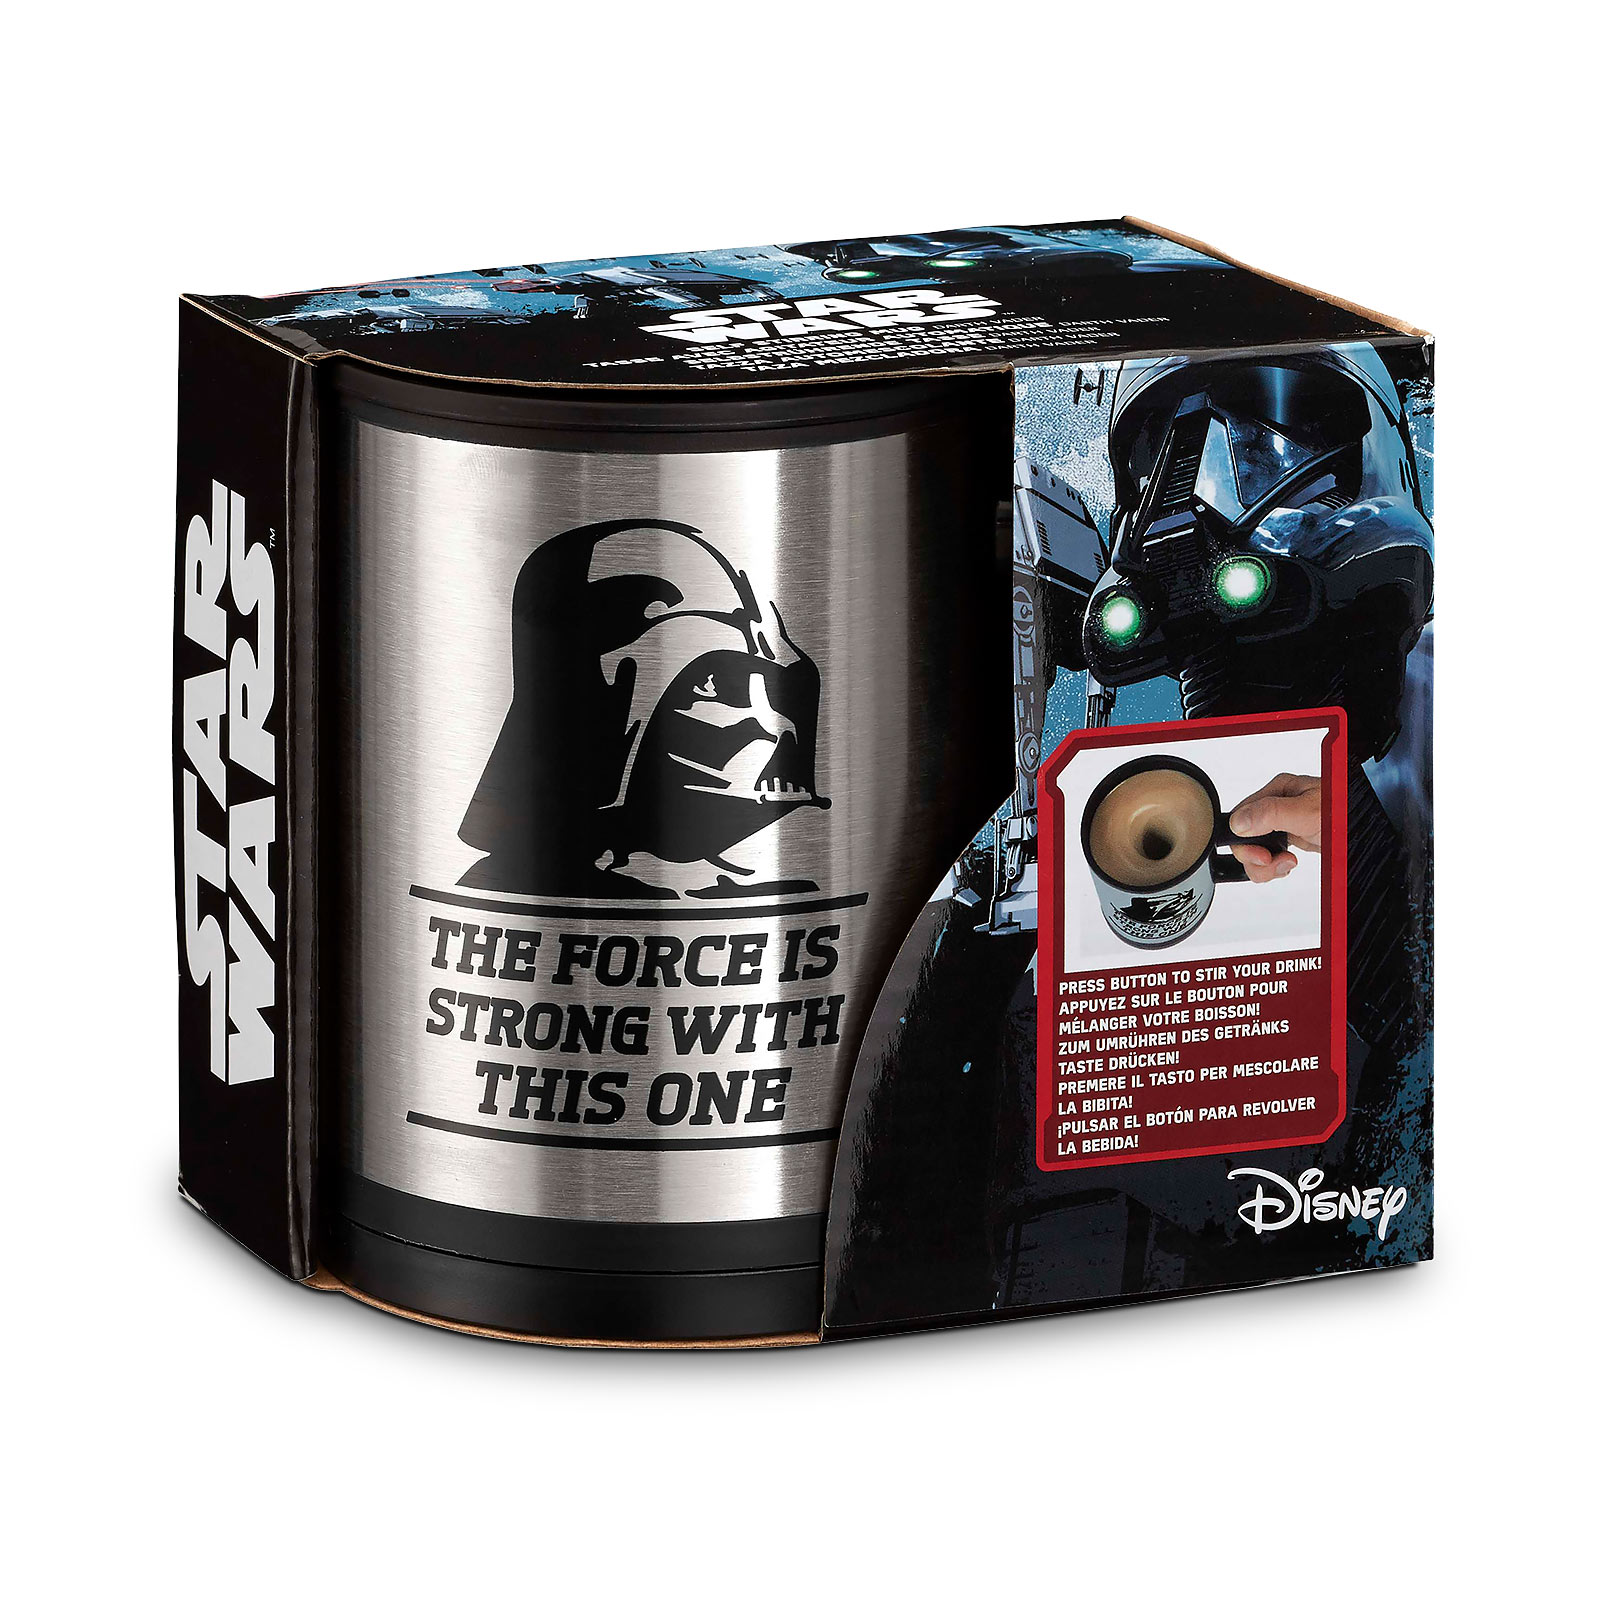 Star Wars - Vader Thermal Mug with Stirring Function